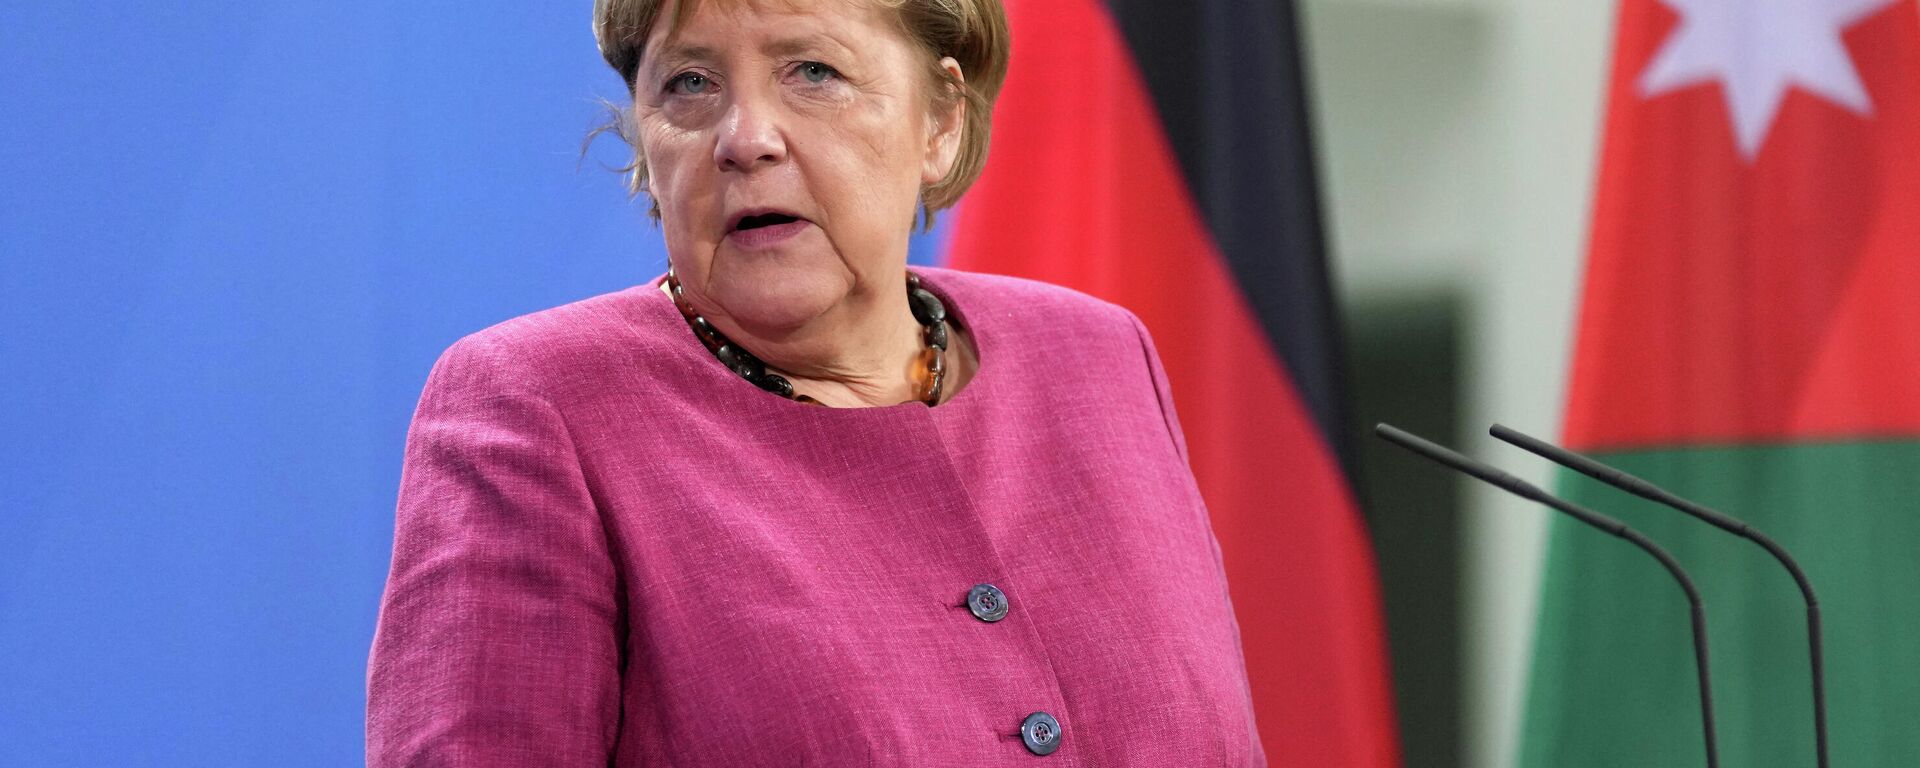 Angela Merkel, la canciller de Alemania - Sputnik Mundo, 1920, 27.10.2021